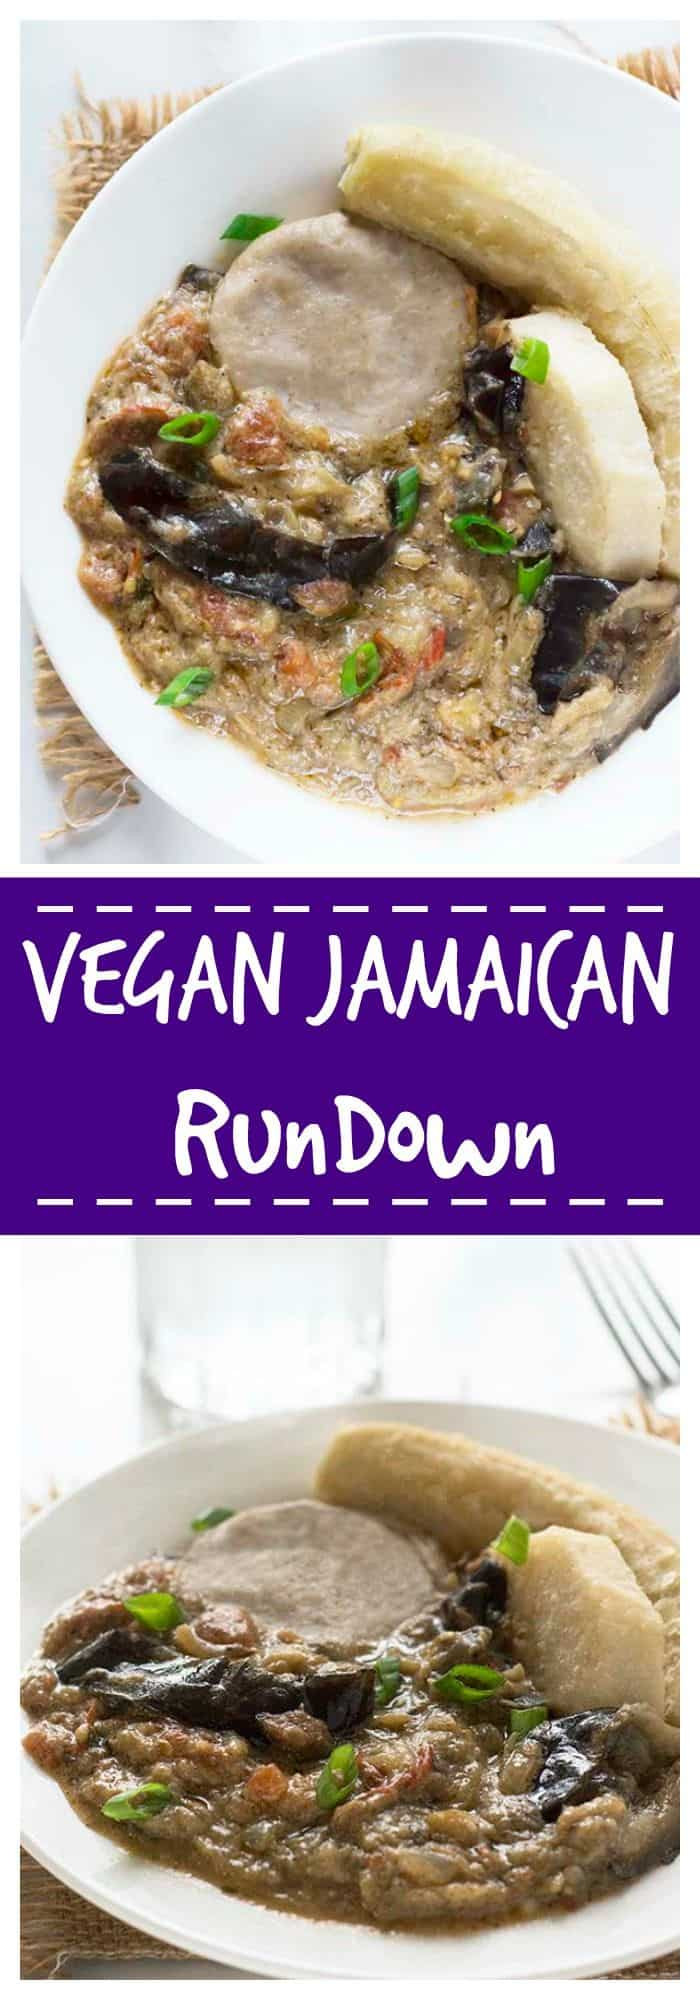 Jamaican Vegan Recipes
 Jamaican Vegan Rundown Recipe